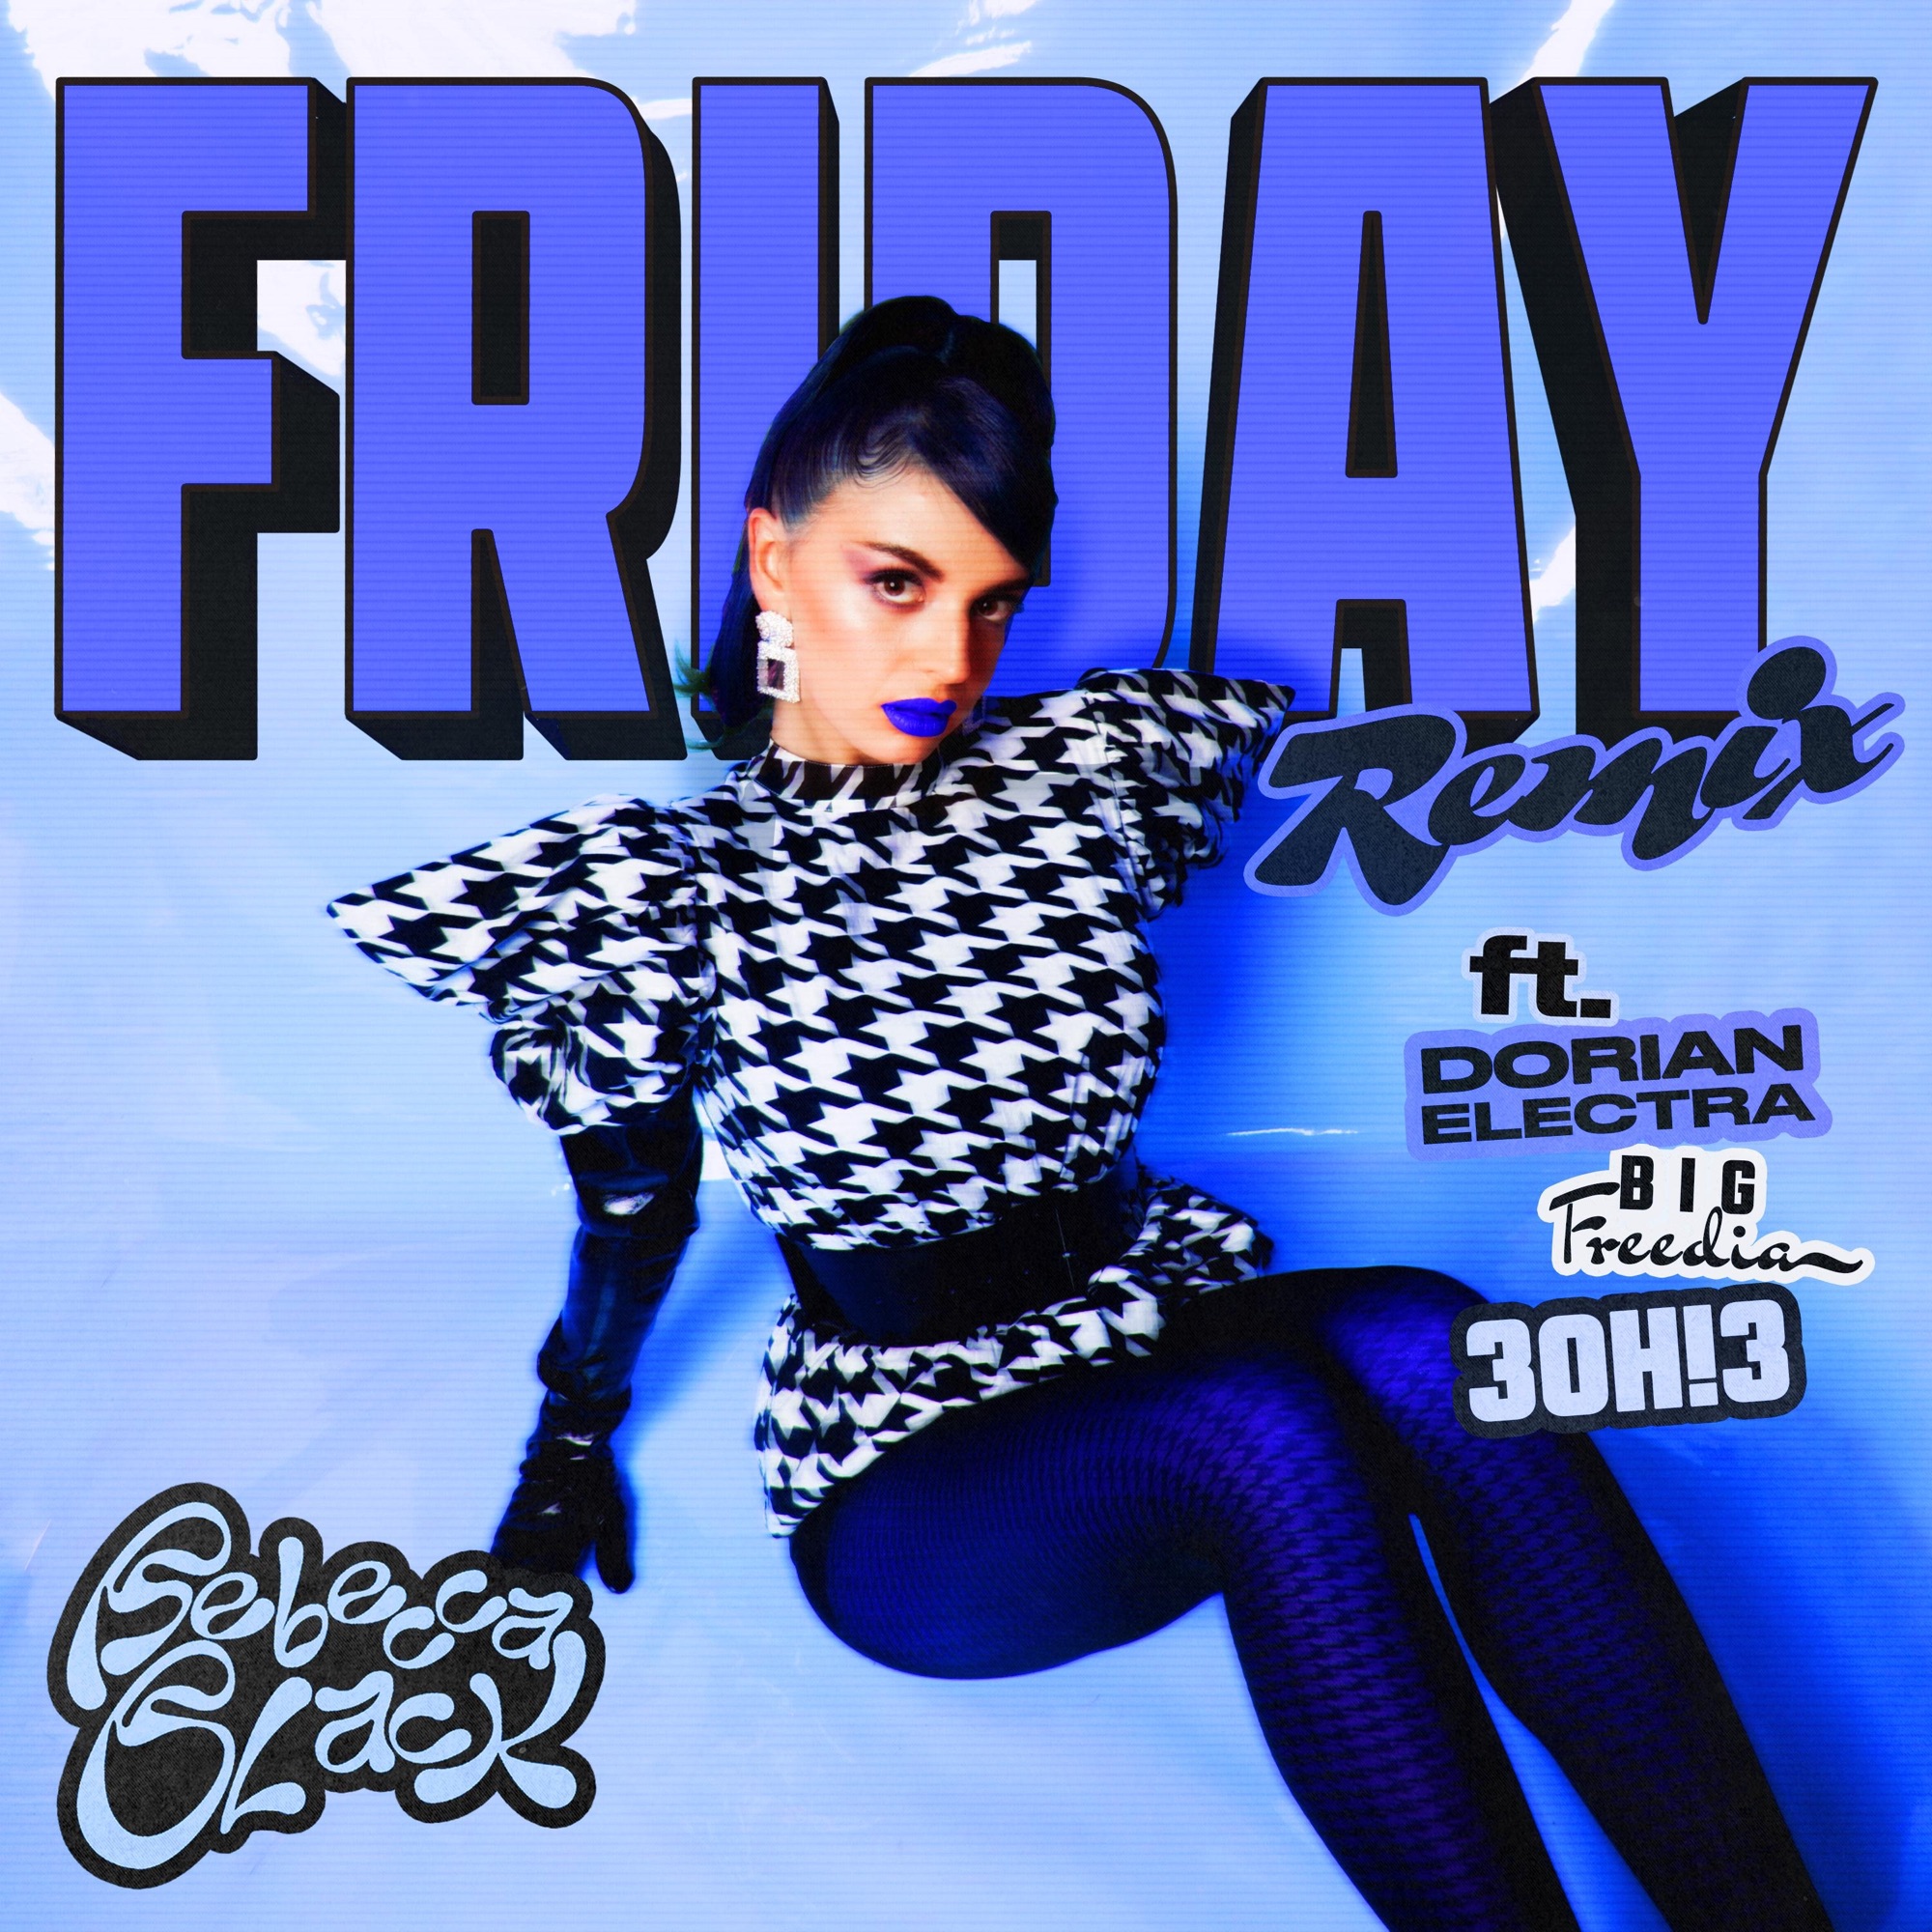 Rebecca Black - Friday (Remix) [feat. 3OH!3, Big Freedia & Dorian Electra] - Single